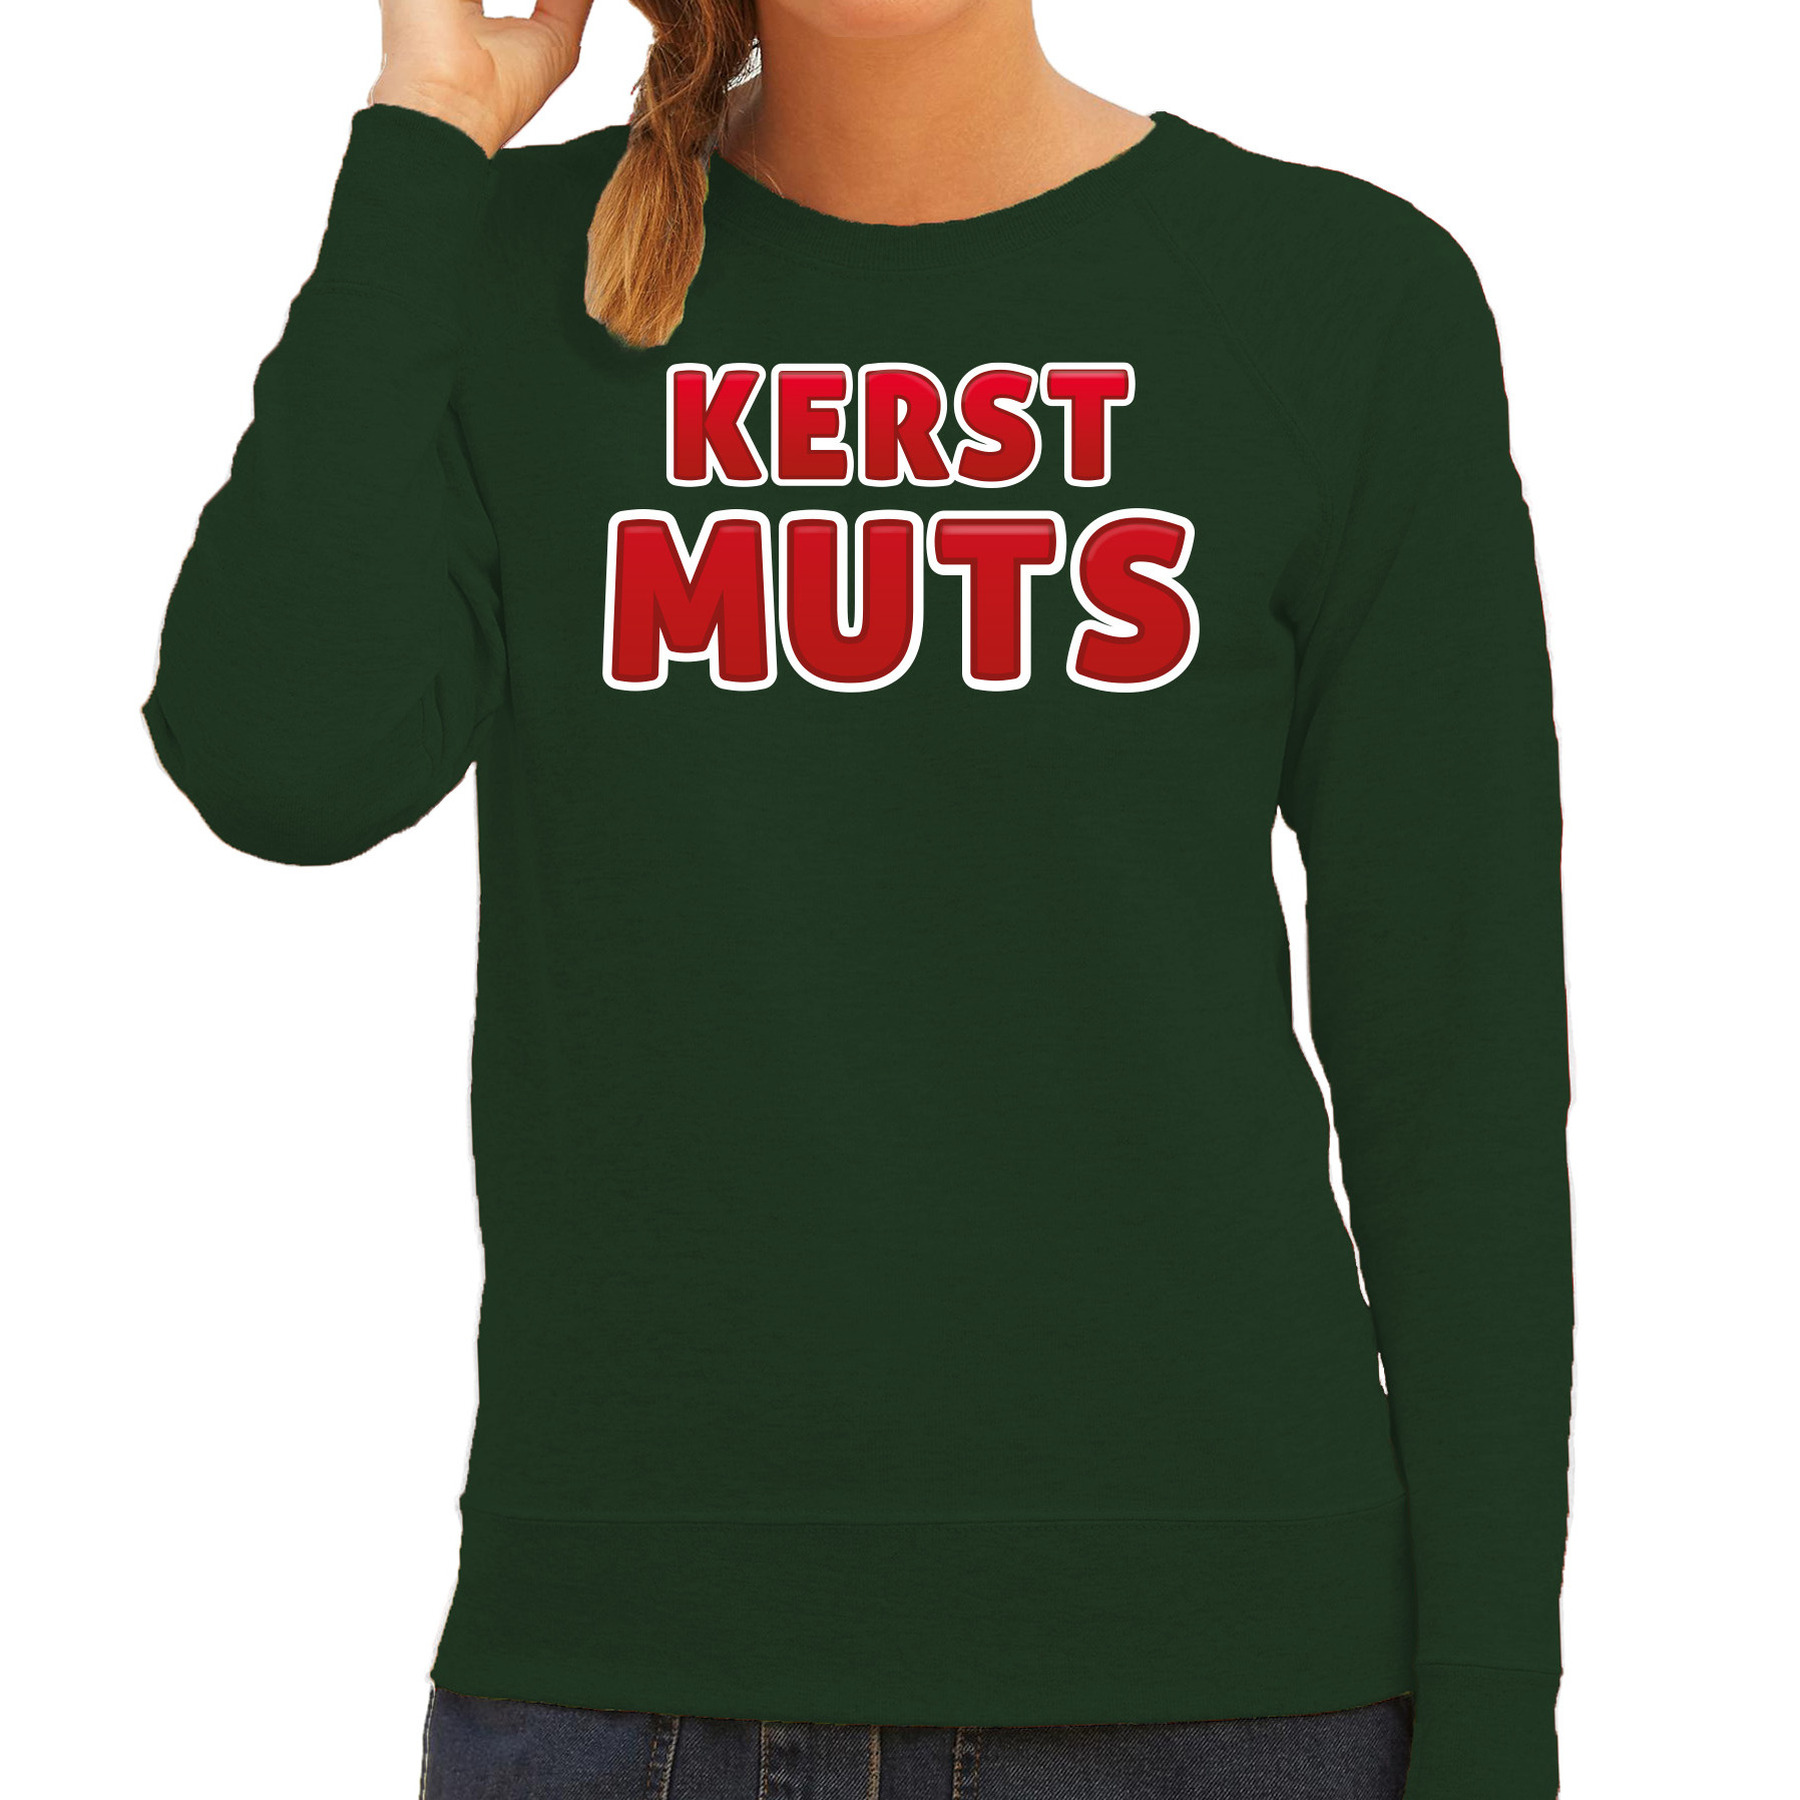 Foute kersttrui-sweater voor dames kerst muts groen kerstmuts feestdagen